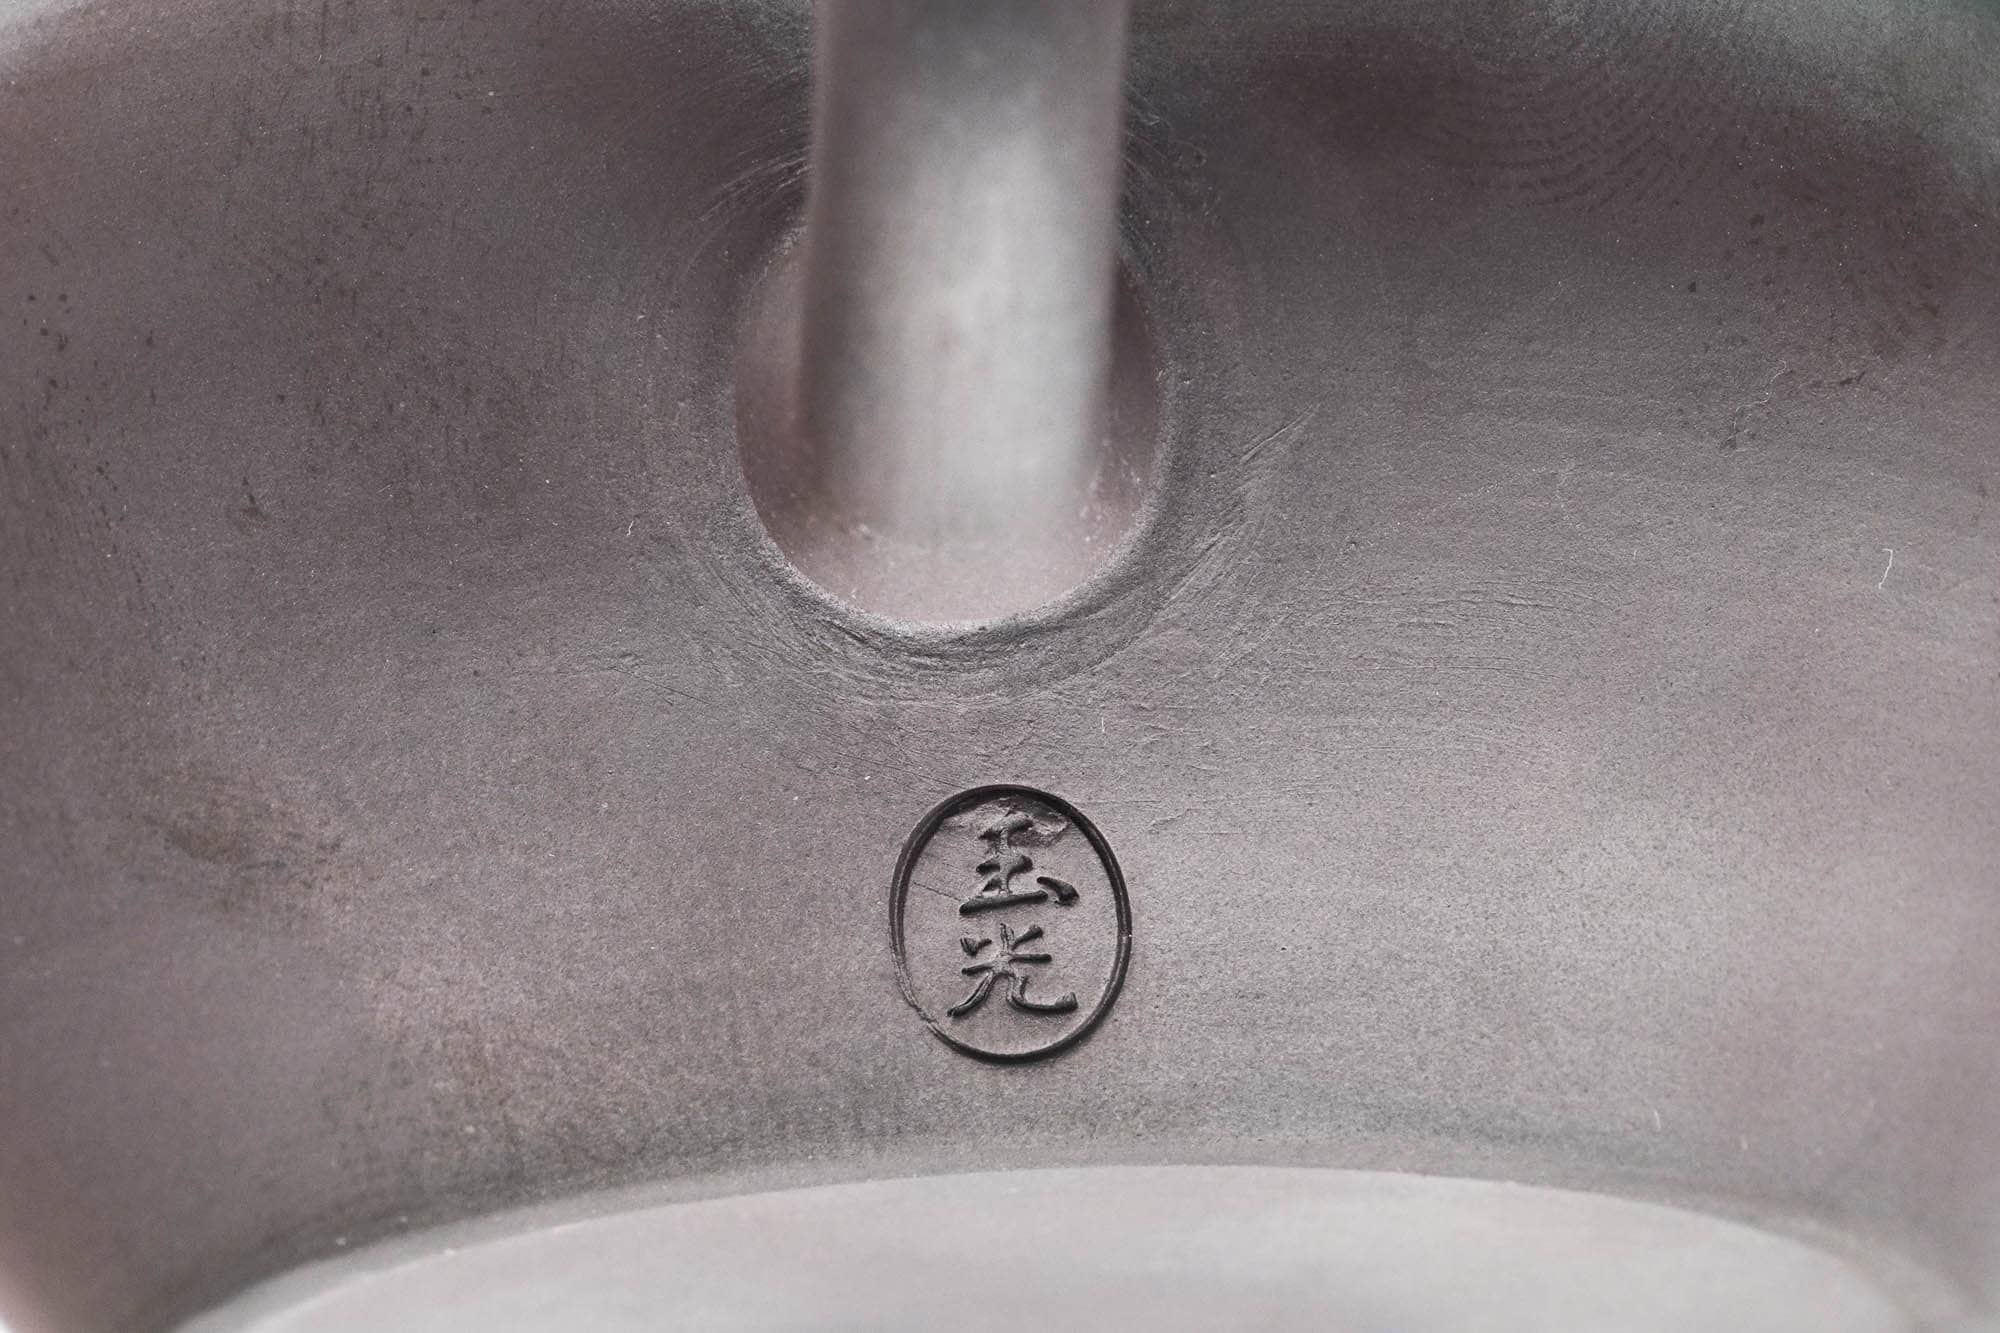 Japanese Kyusu - 玉光 Gyokko Kiln - Kokudei Yōhen Tokoname-yaki Rear-Handled Teapot - 110ml